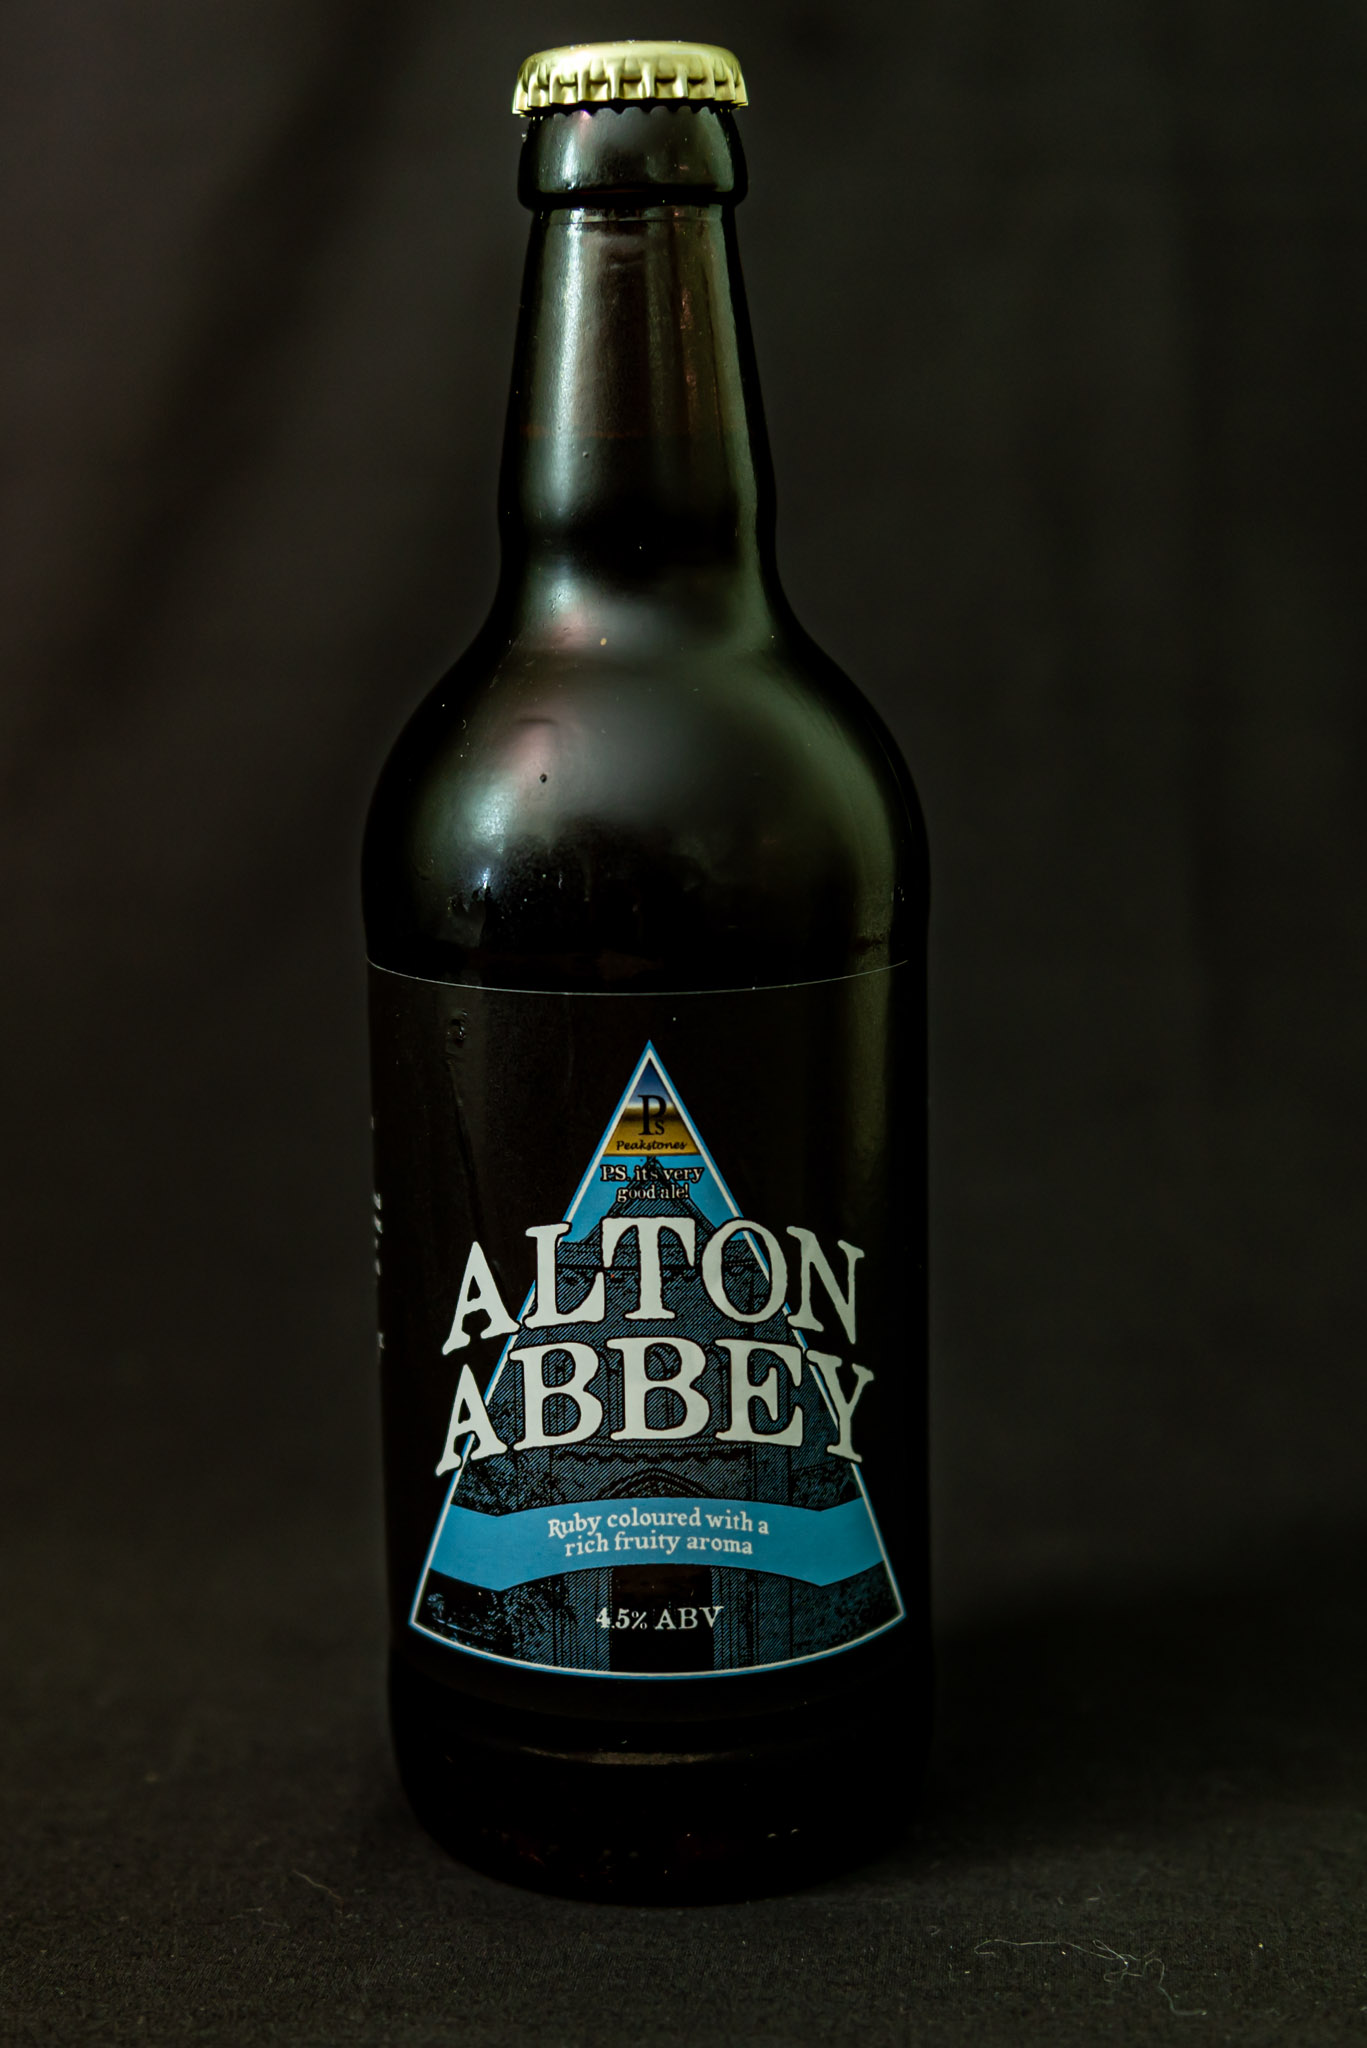  A bottle of Alton Abbey